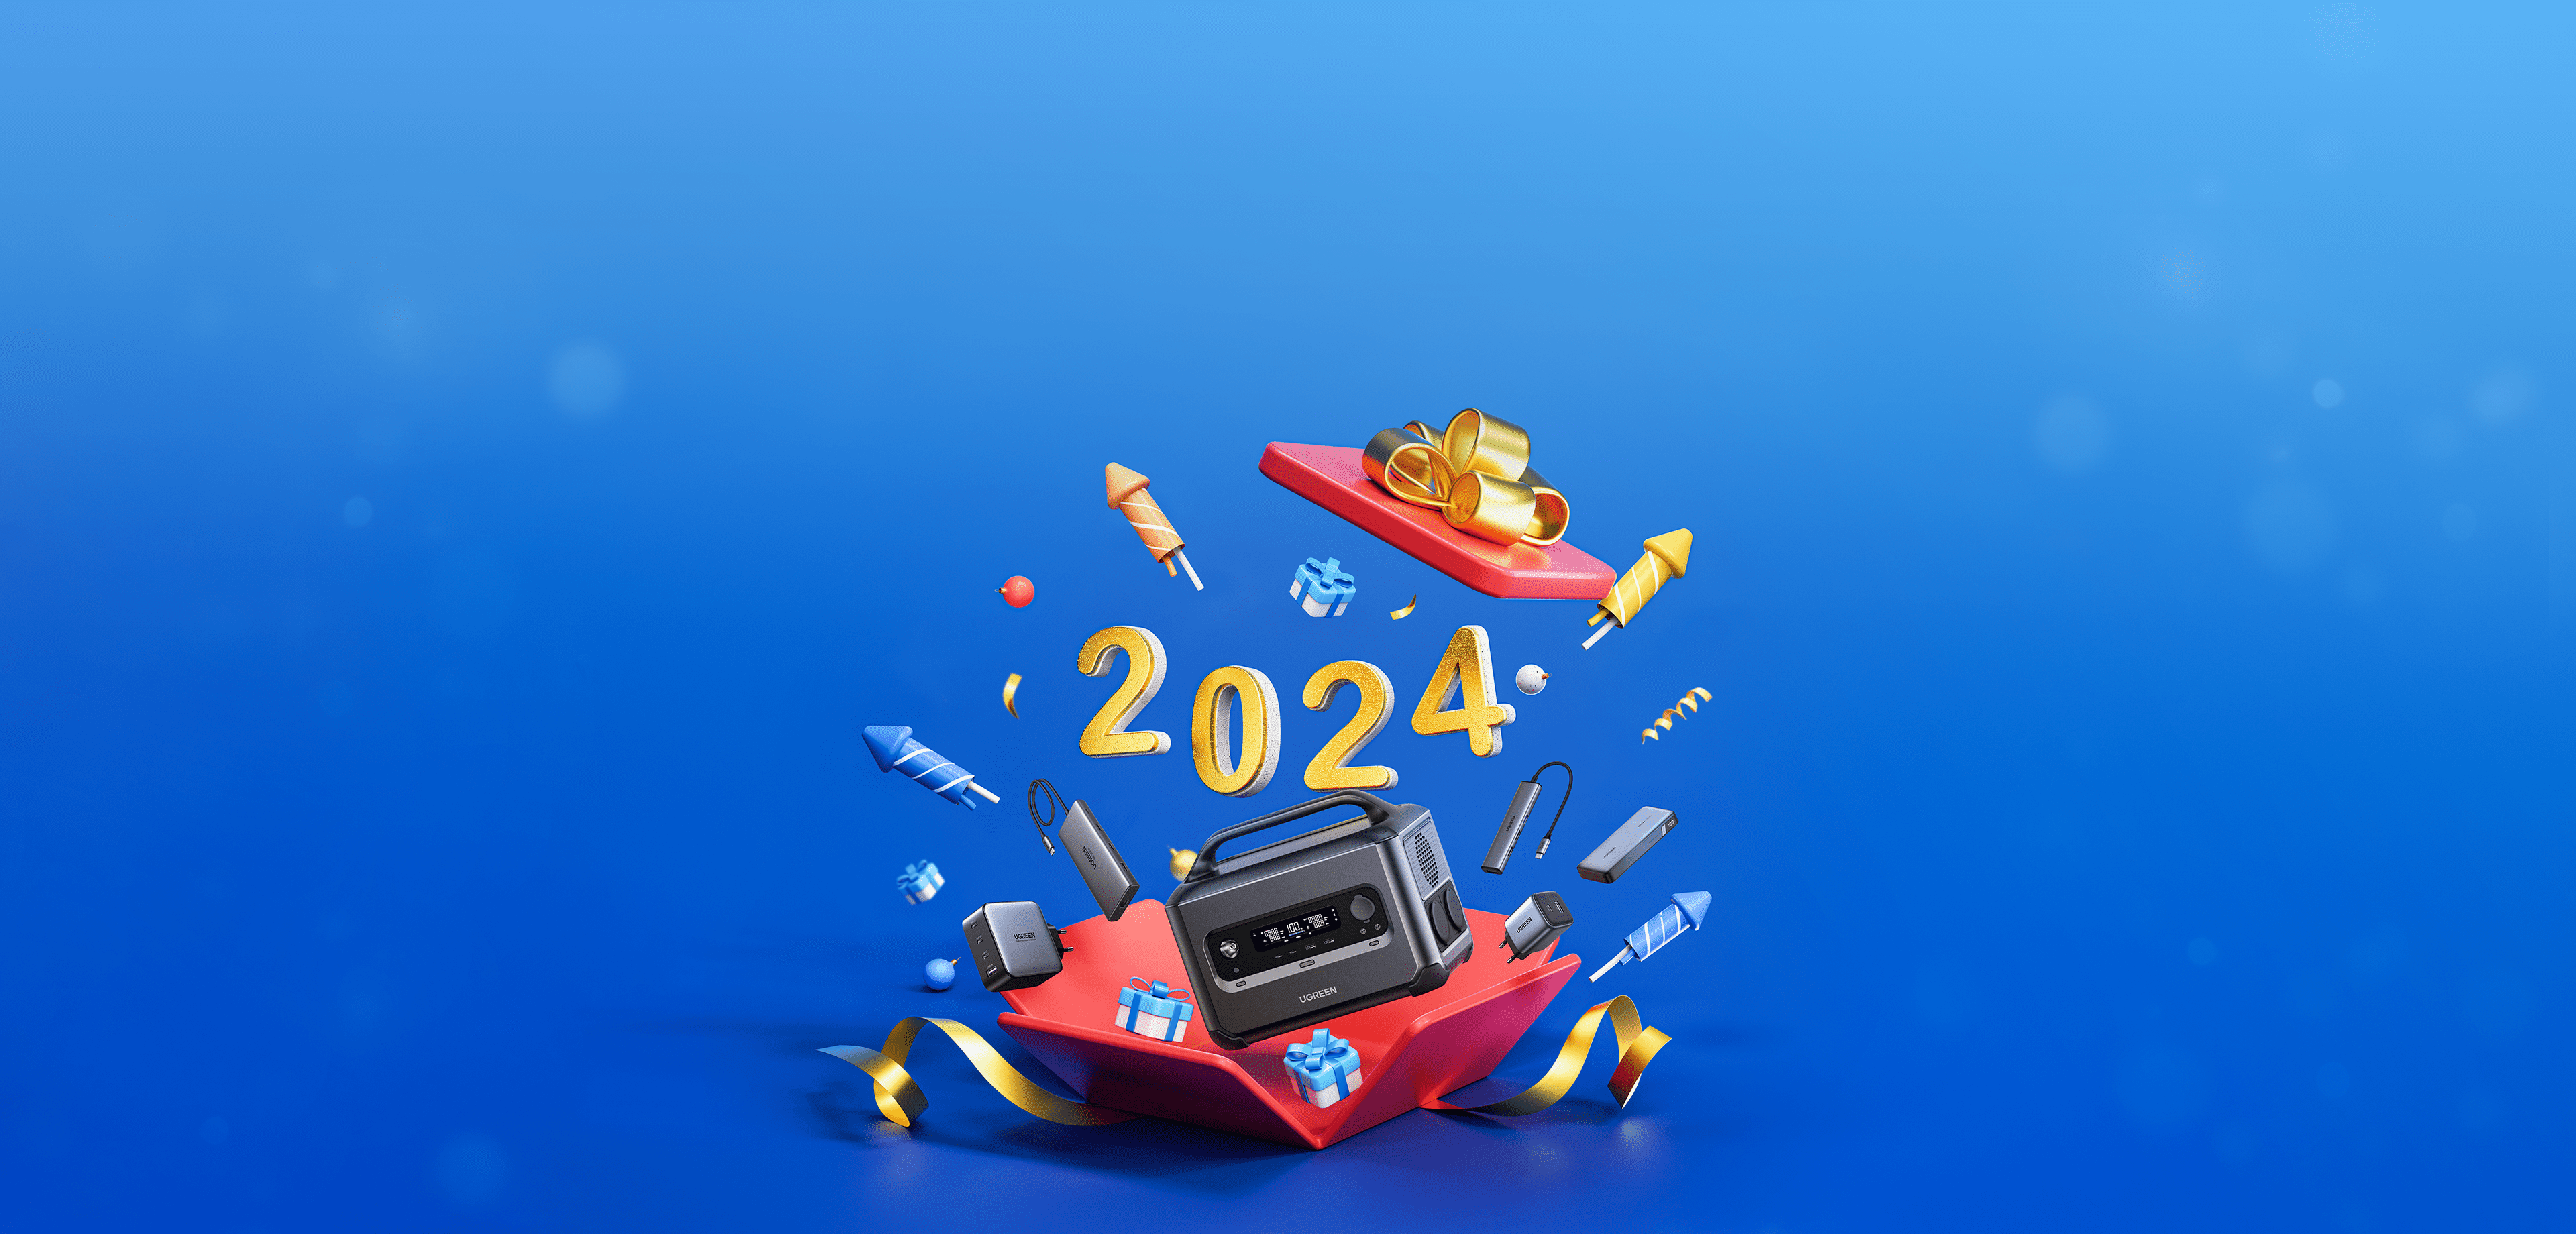 2024 NEW YEAR